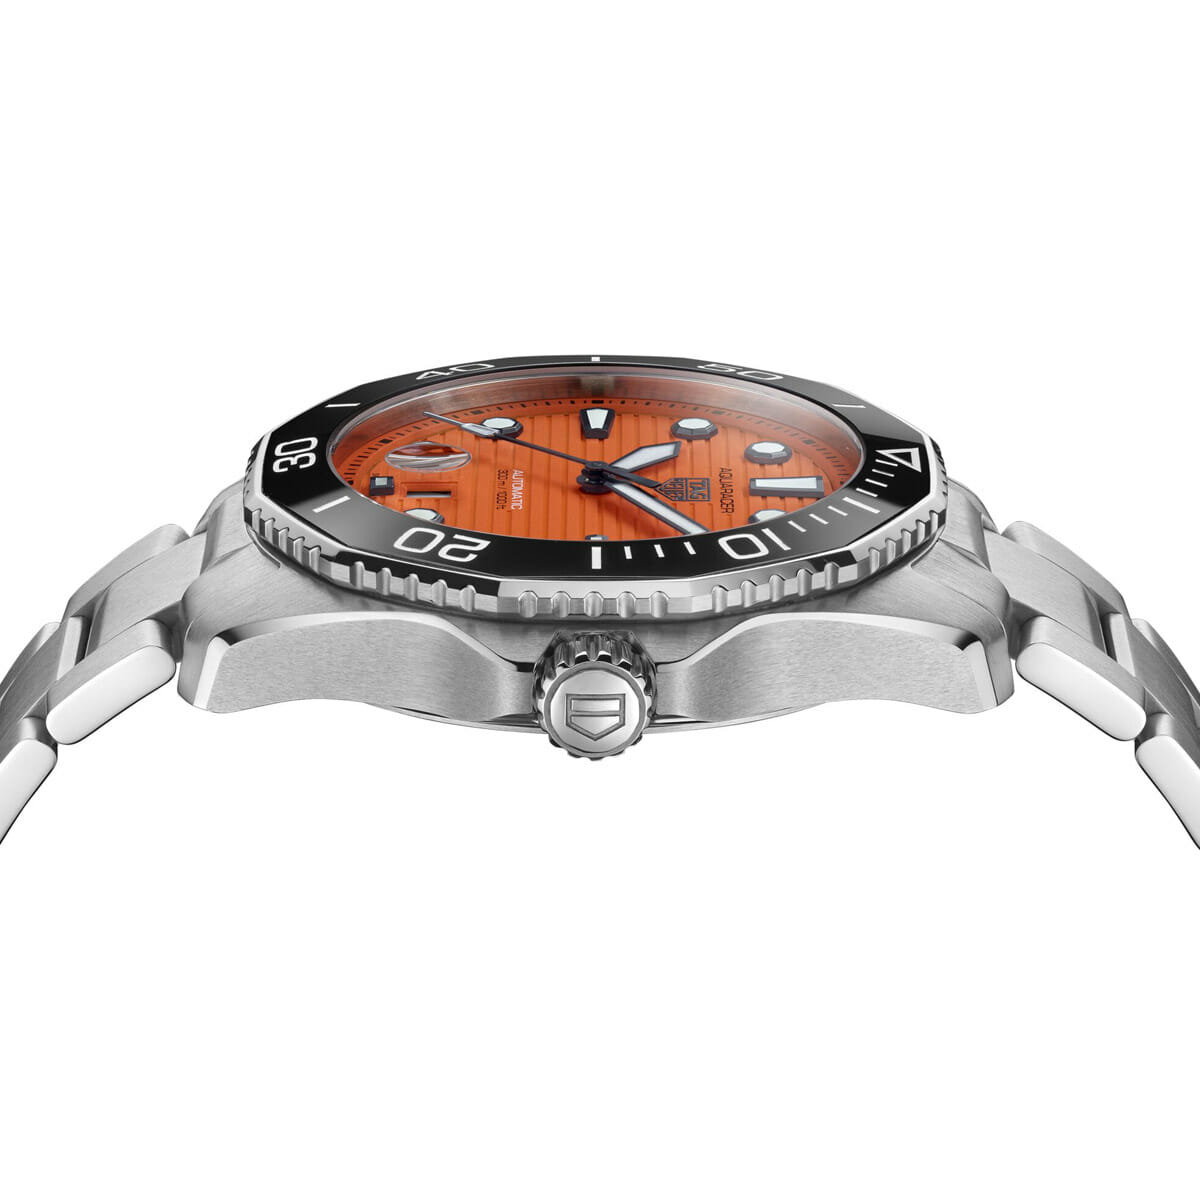 Aquaracer Professional 300 Orange Diver 42mm Watch